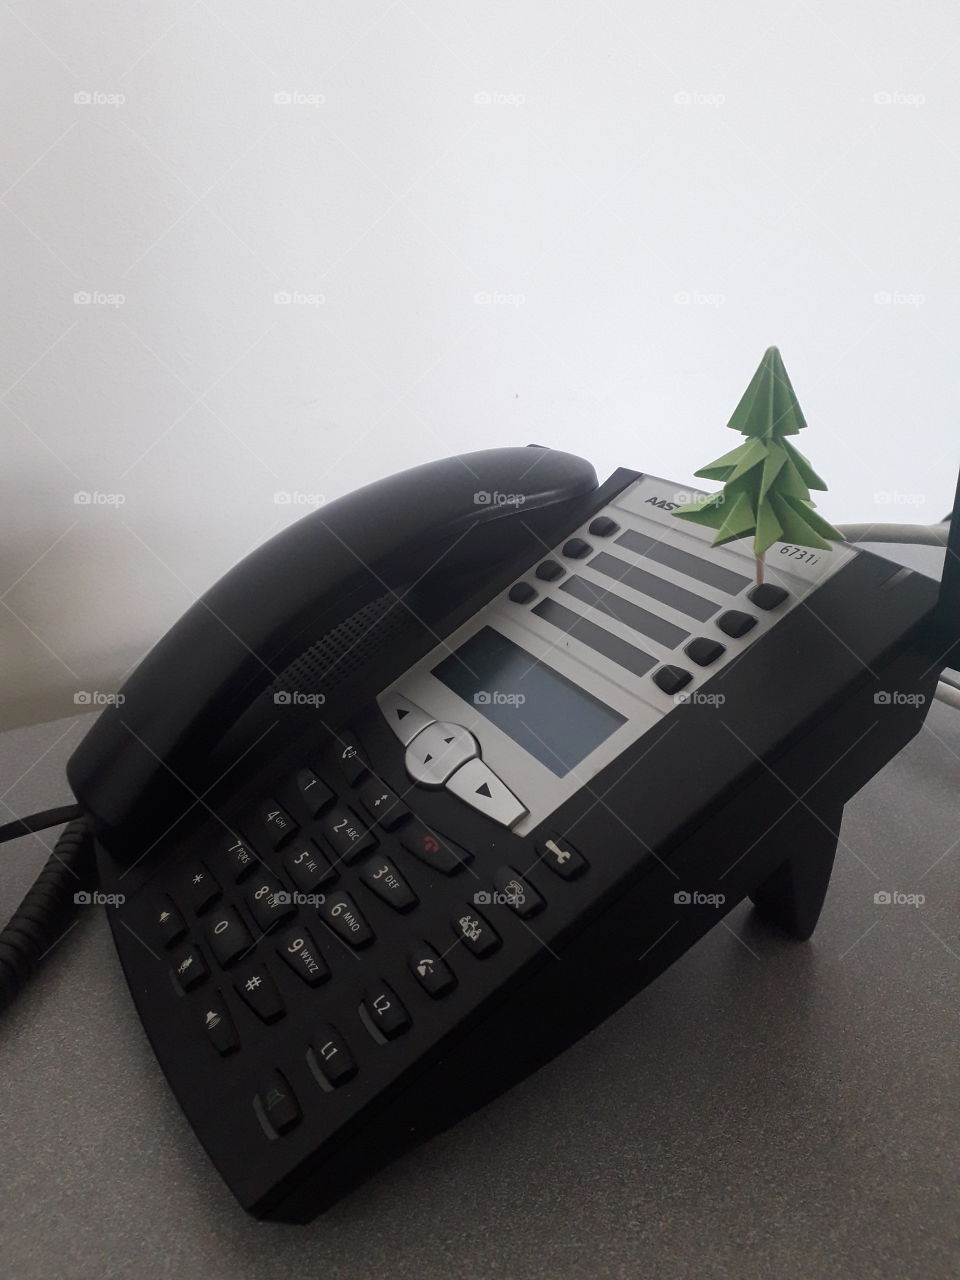 Porfesionnal phone for Christmas